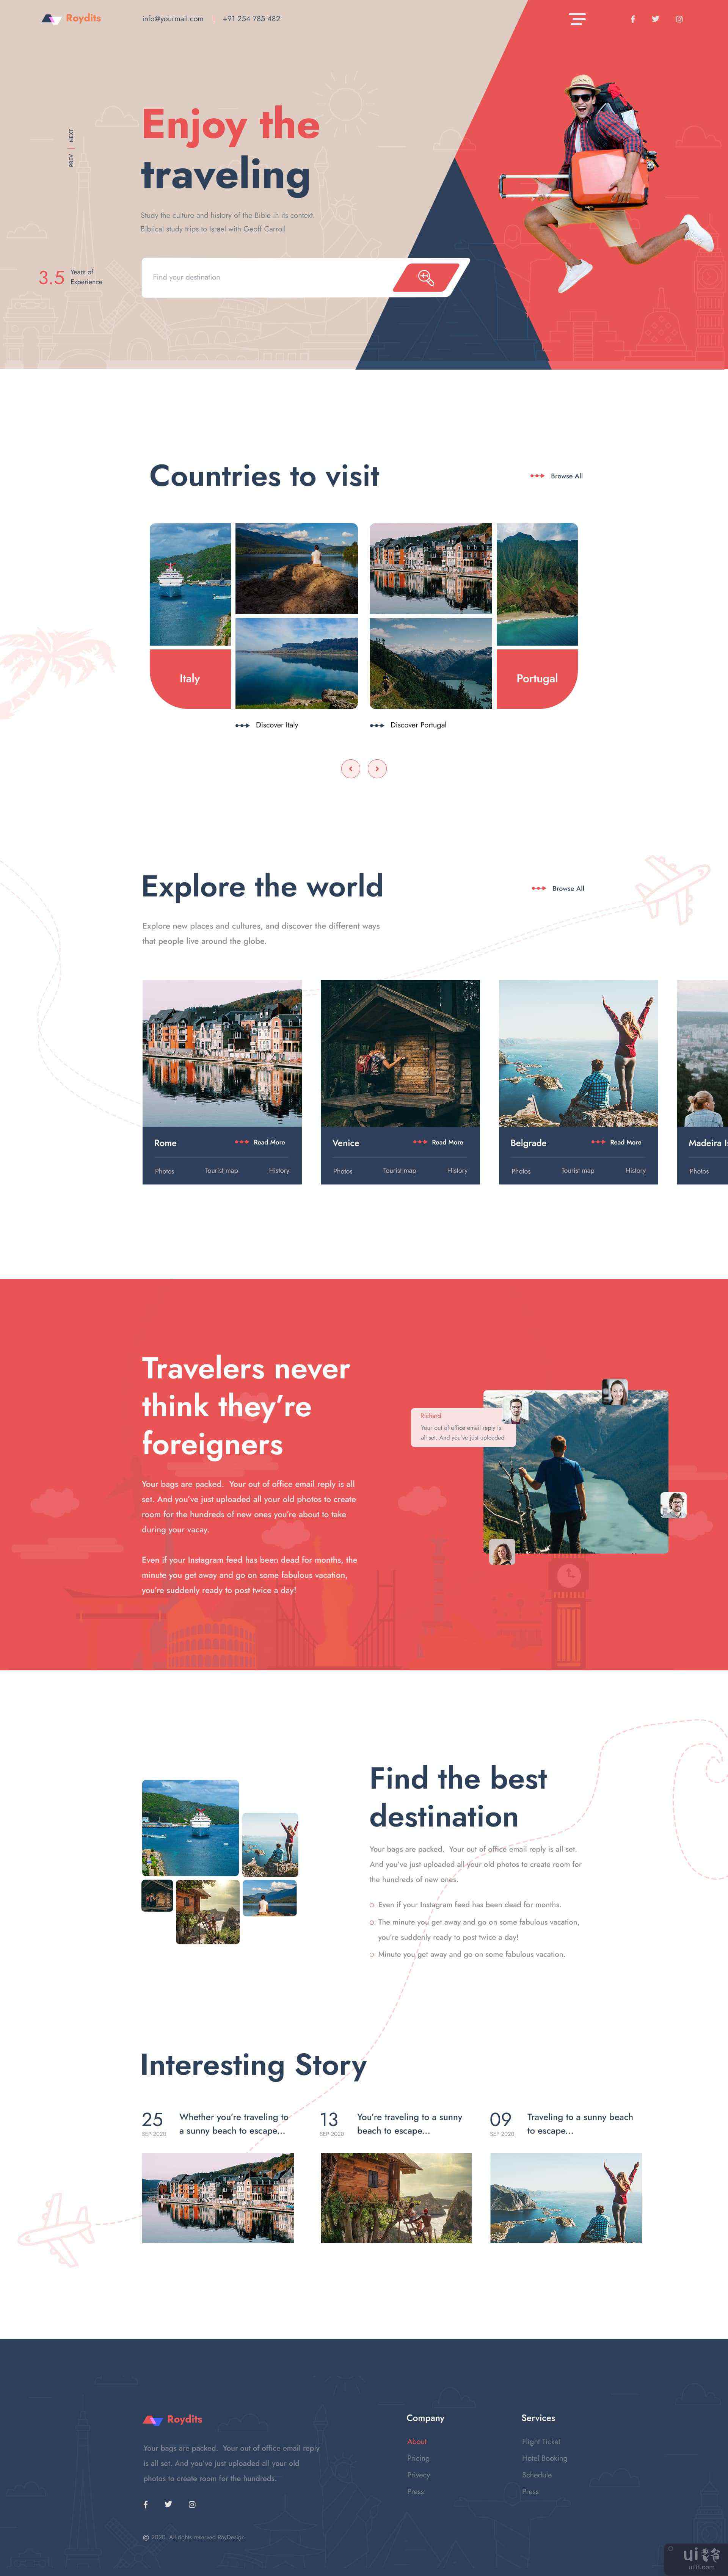 旅行社网站设计(Travel Agency Website Design)插图